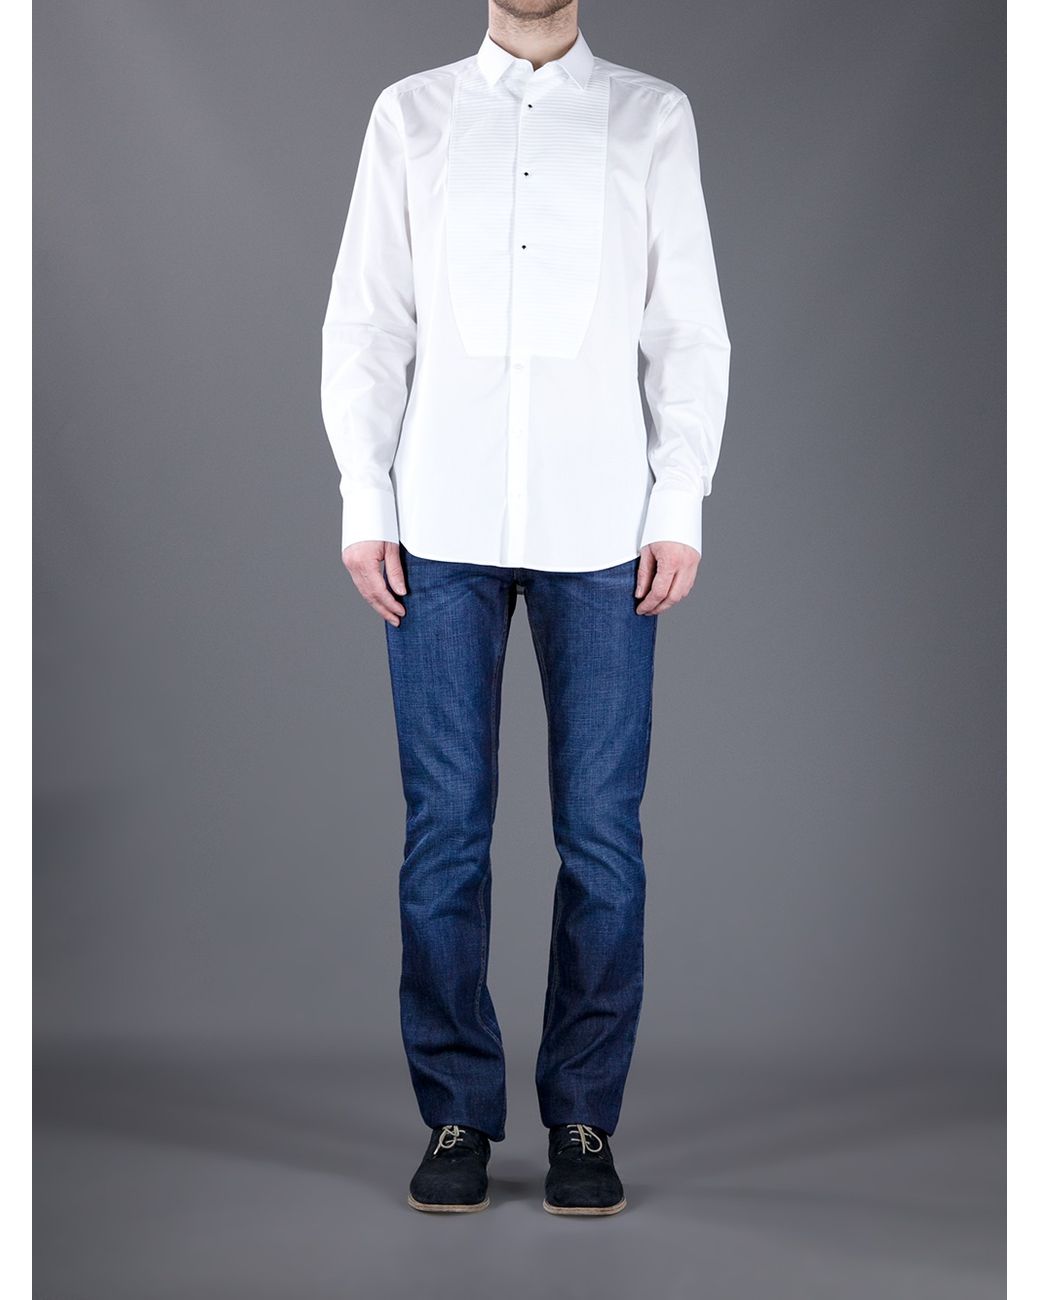 Dolce & Gabbana Cotton Slim Tuxedo Shirt in White for Men Mens Clothing Shirts Formal shirts 